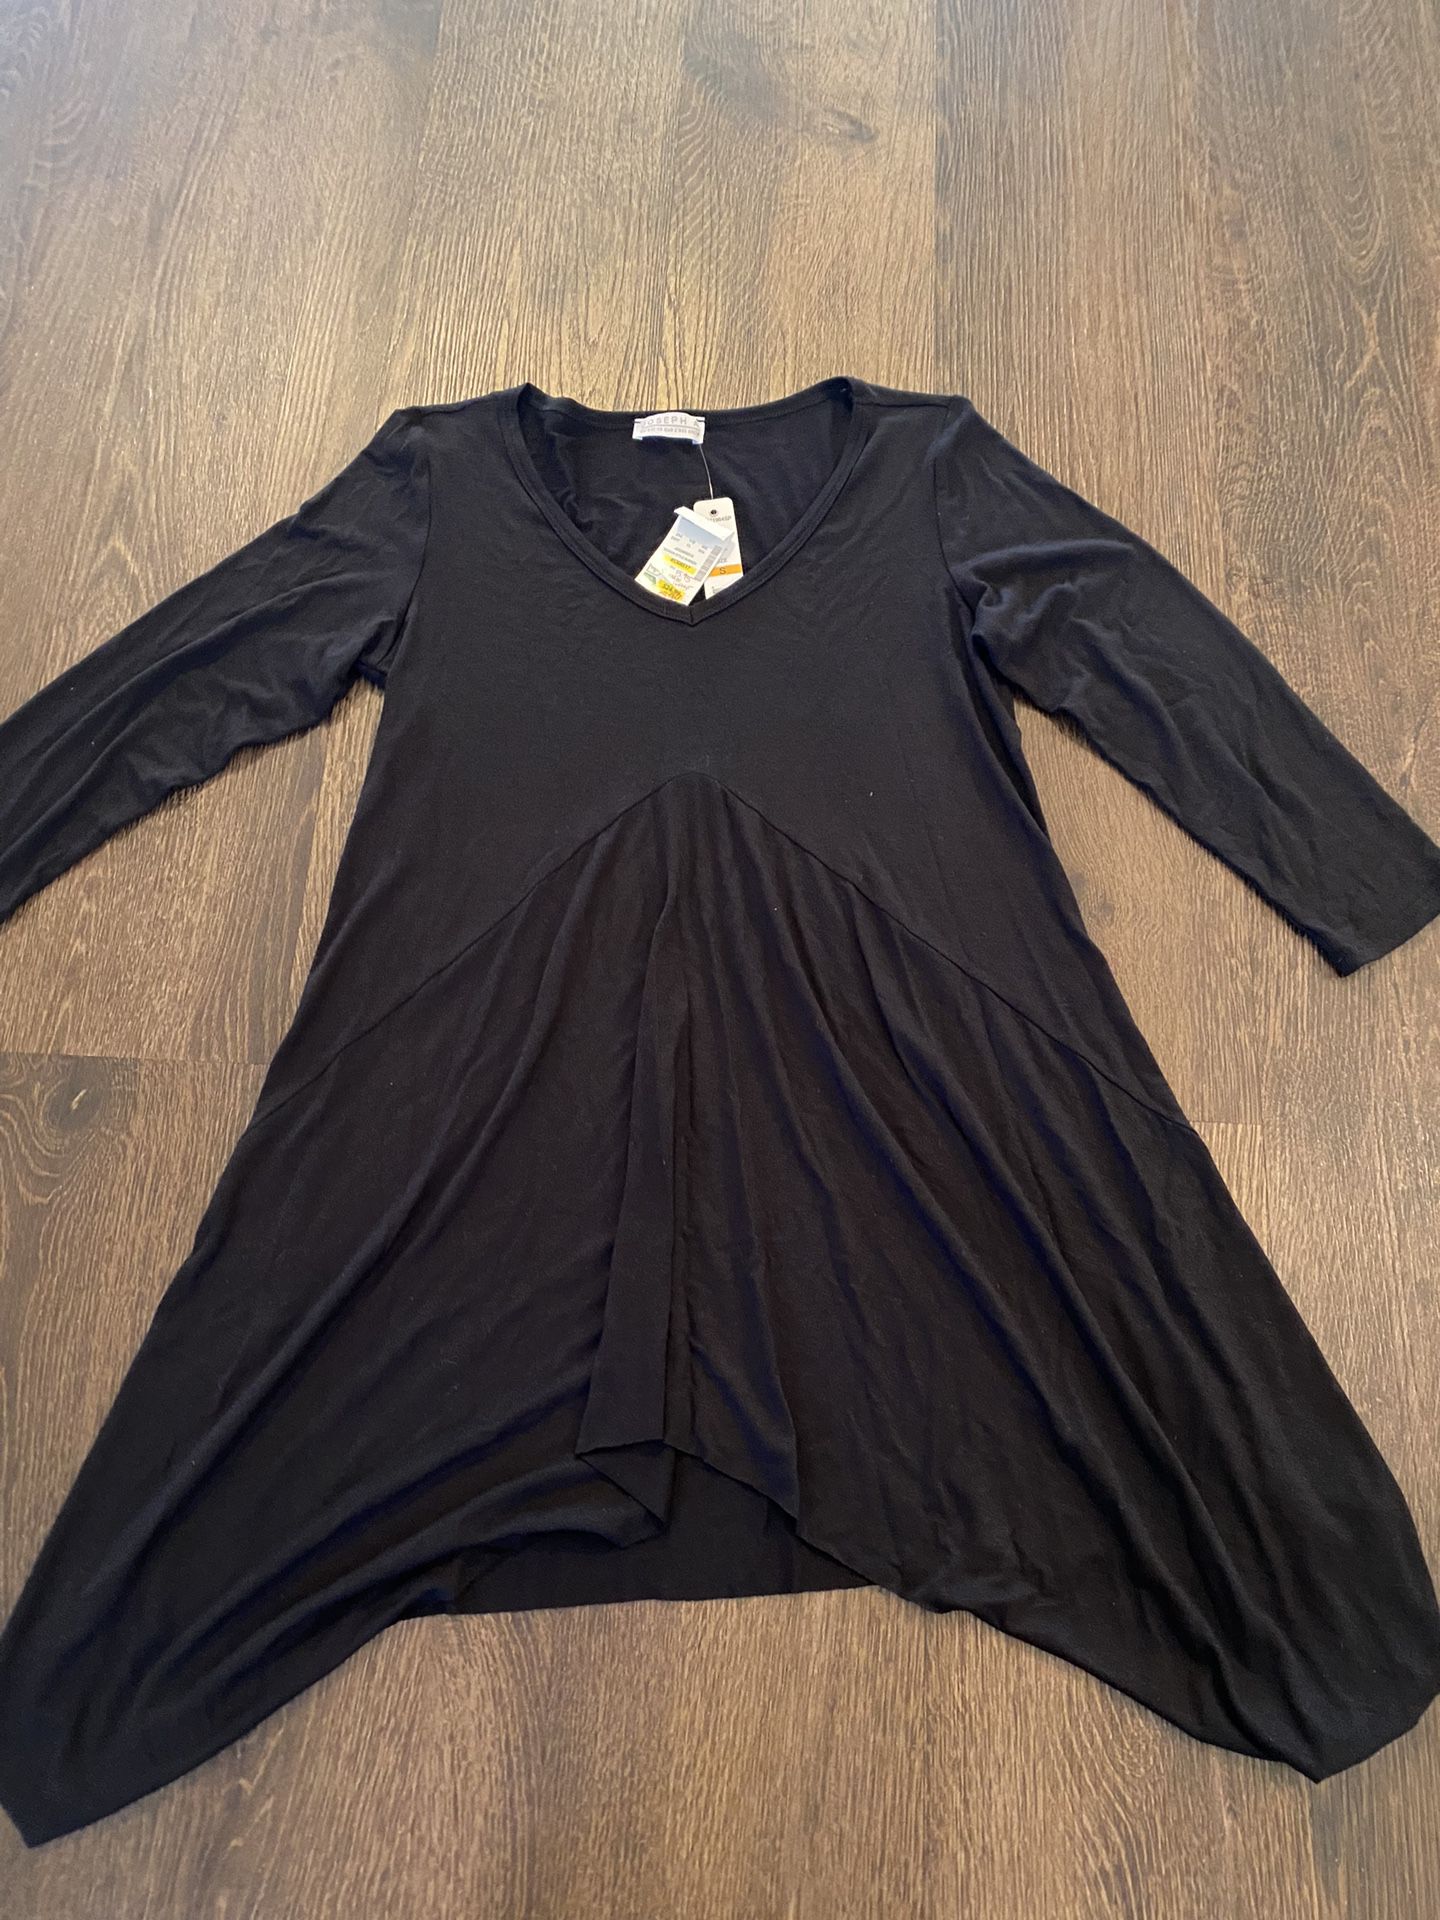 NEW Womans Black Tunic Shirt Size Small By Joseph A #14